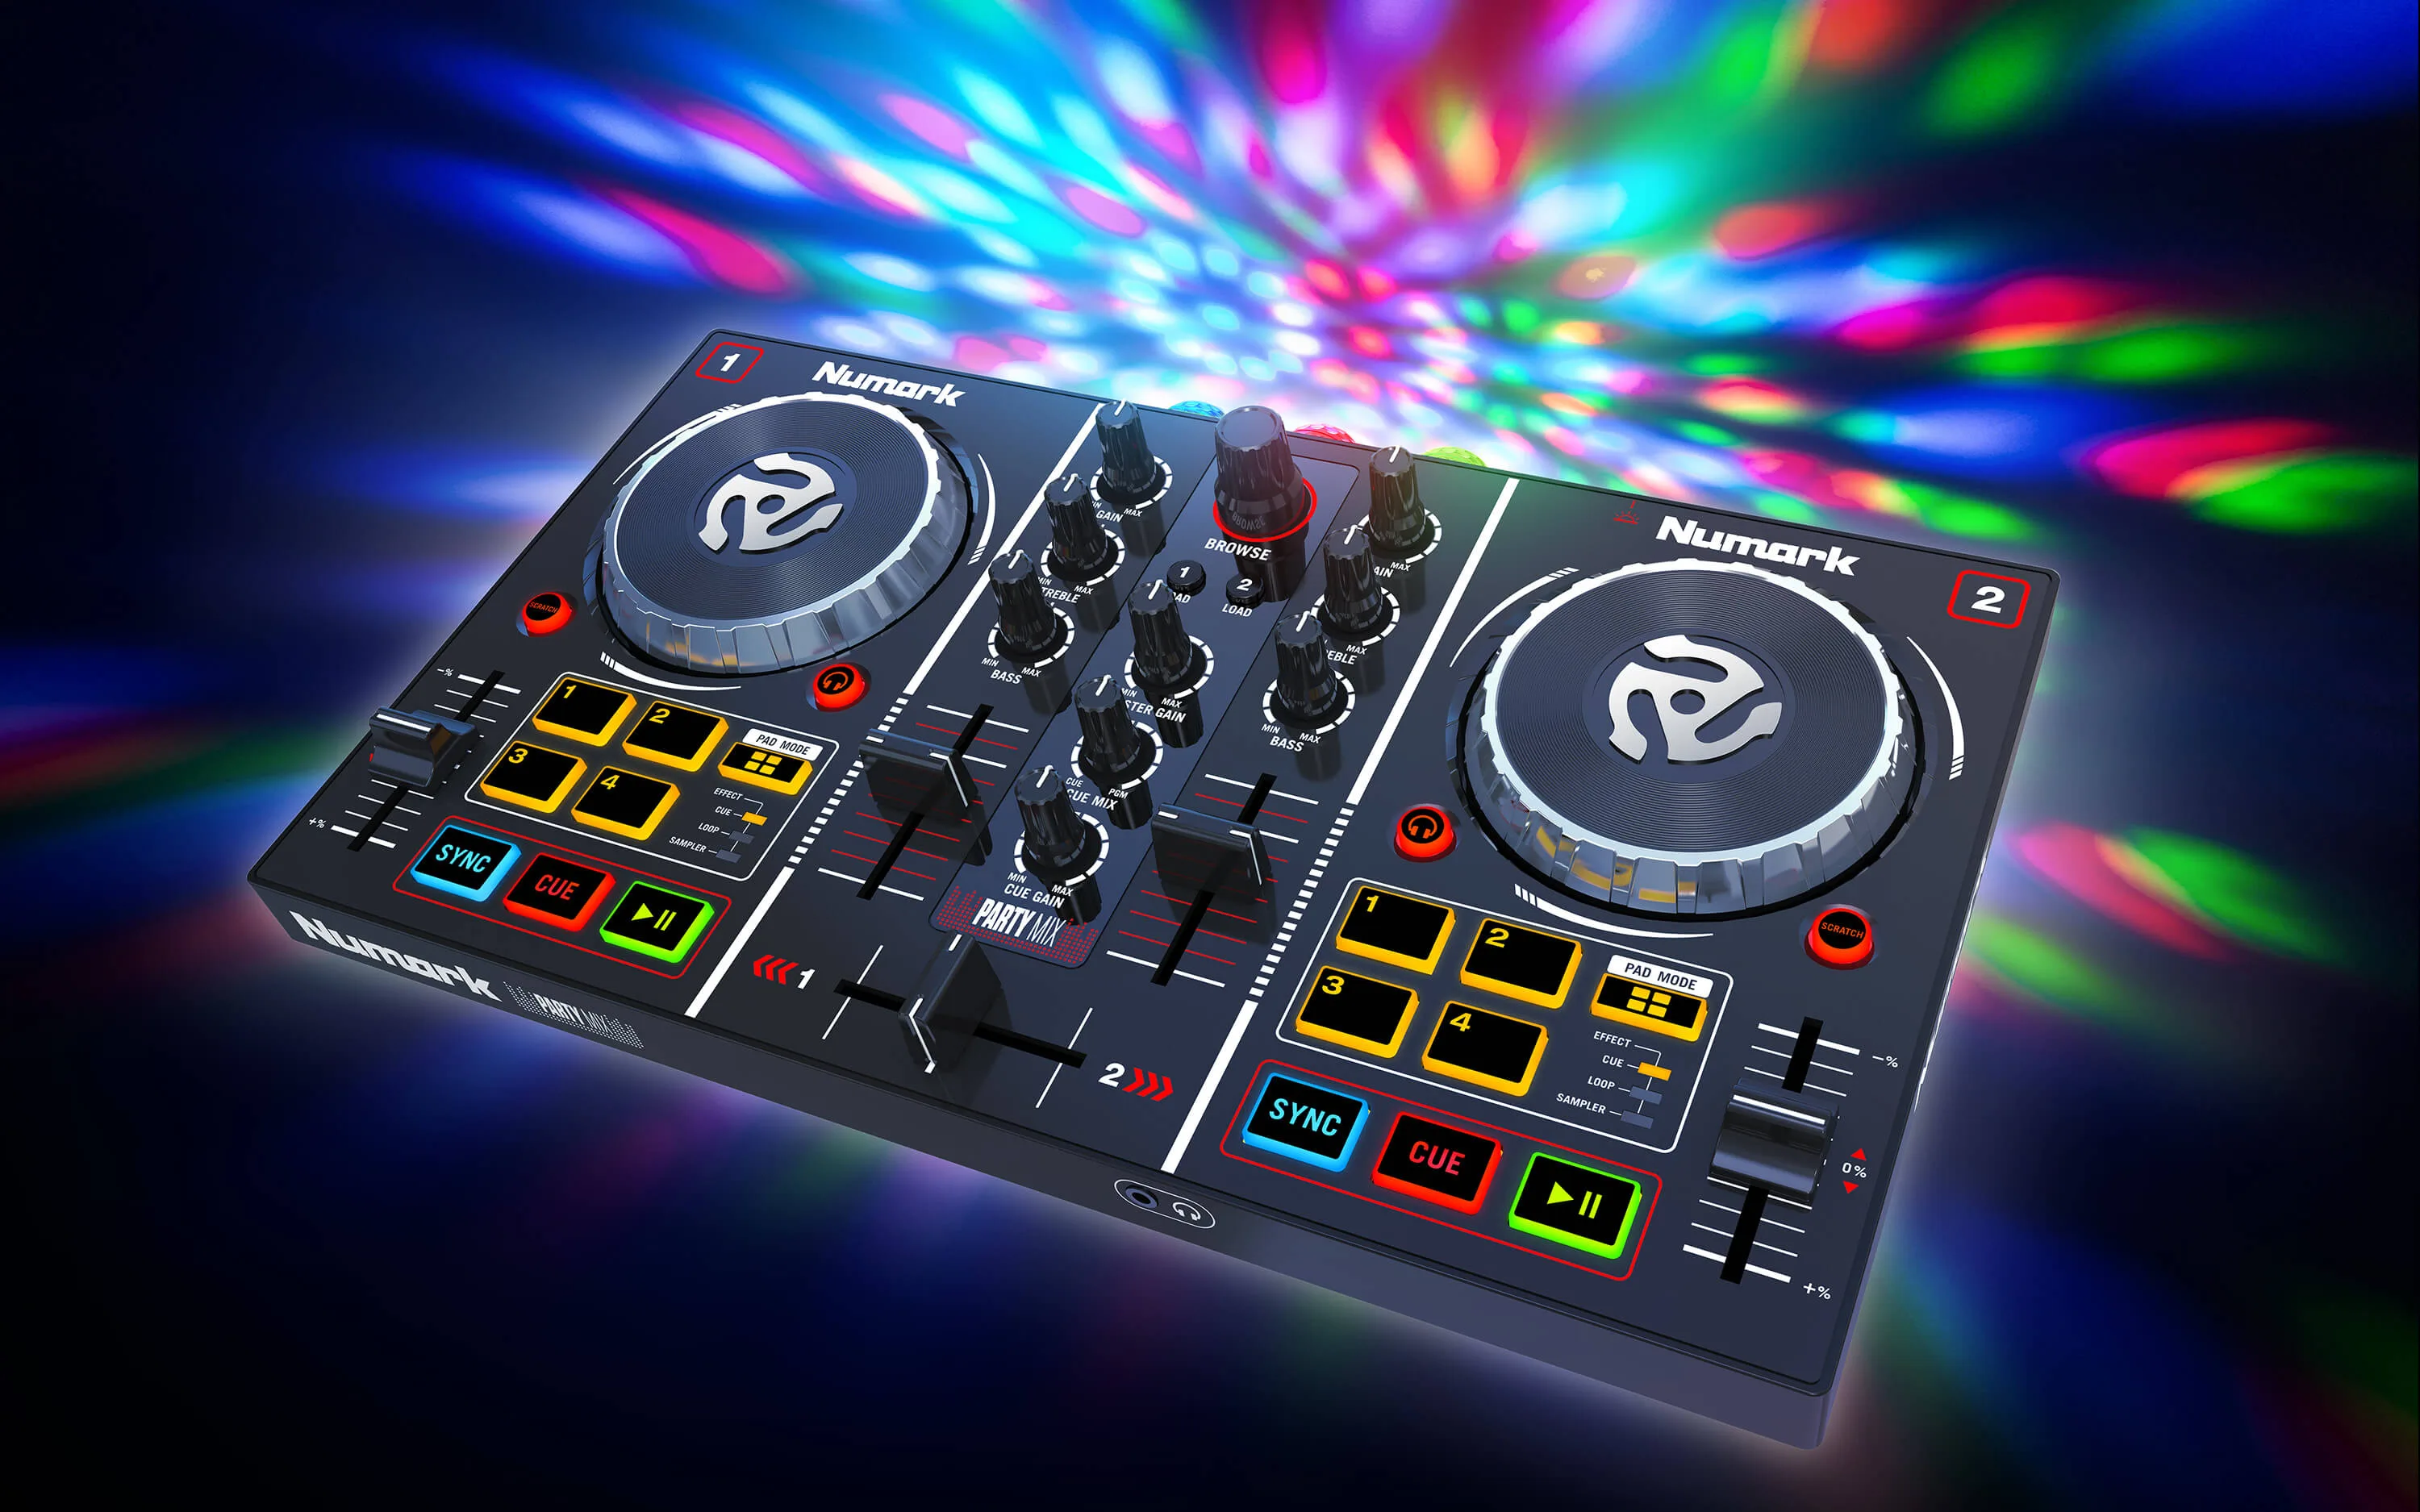 numark-s-party-mix-dj-controller-now-includes-serato-dj-lite